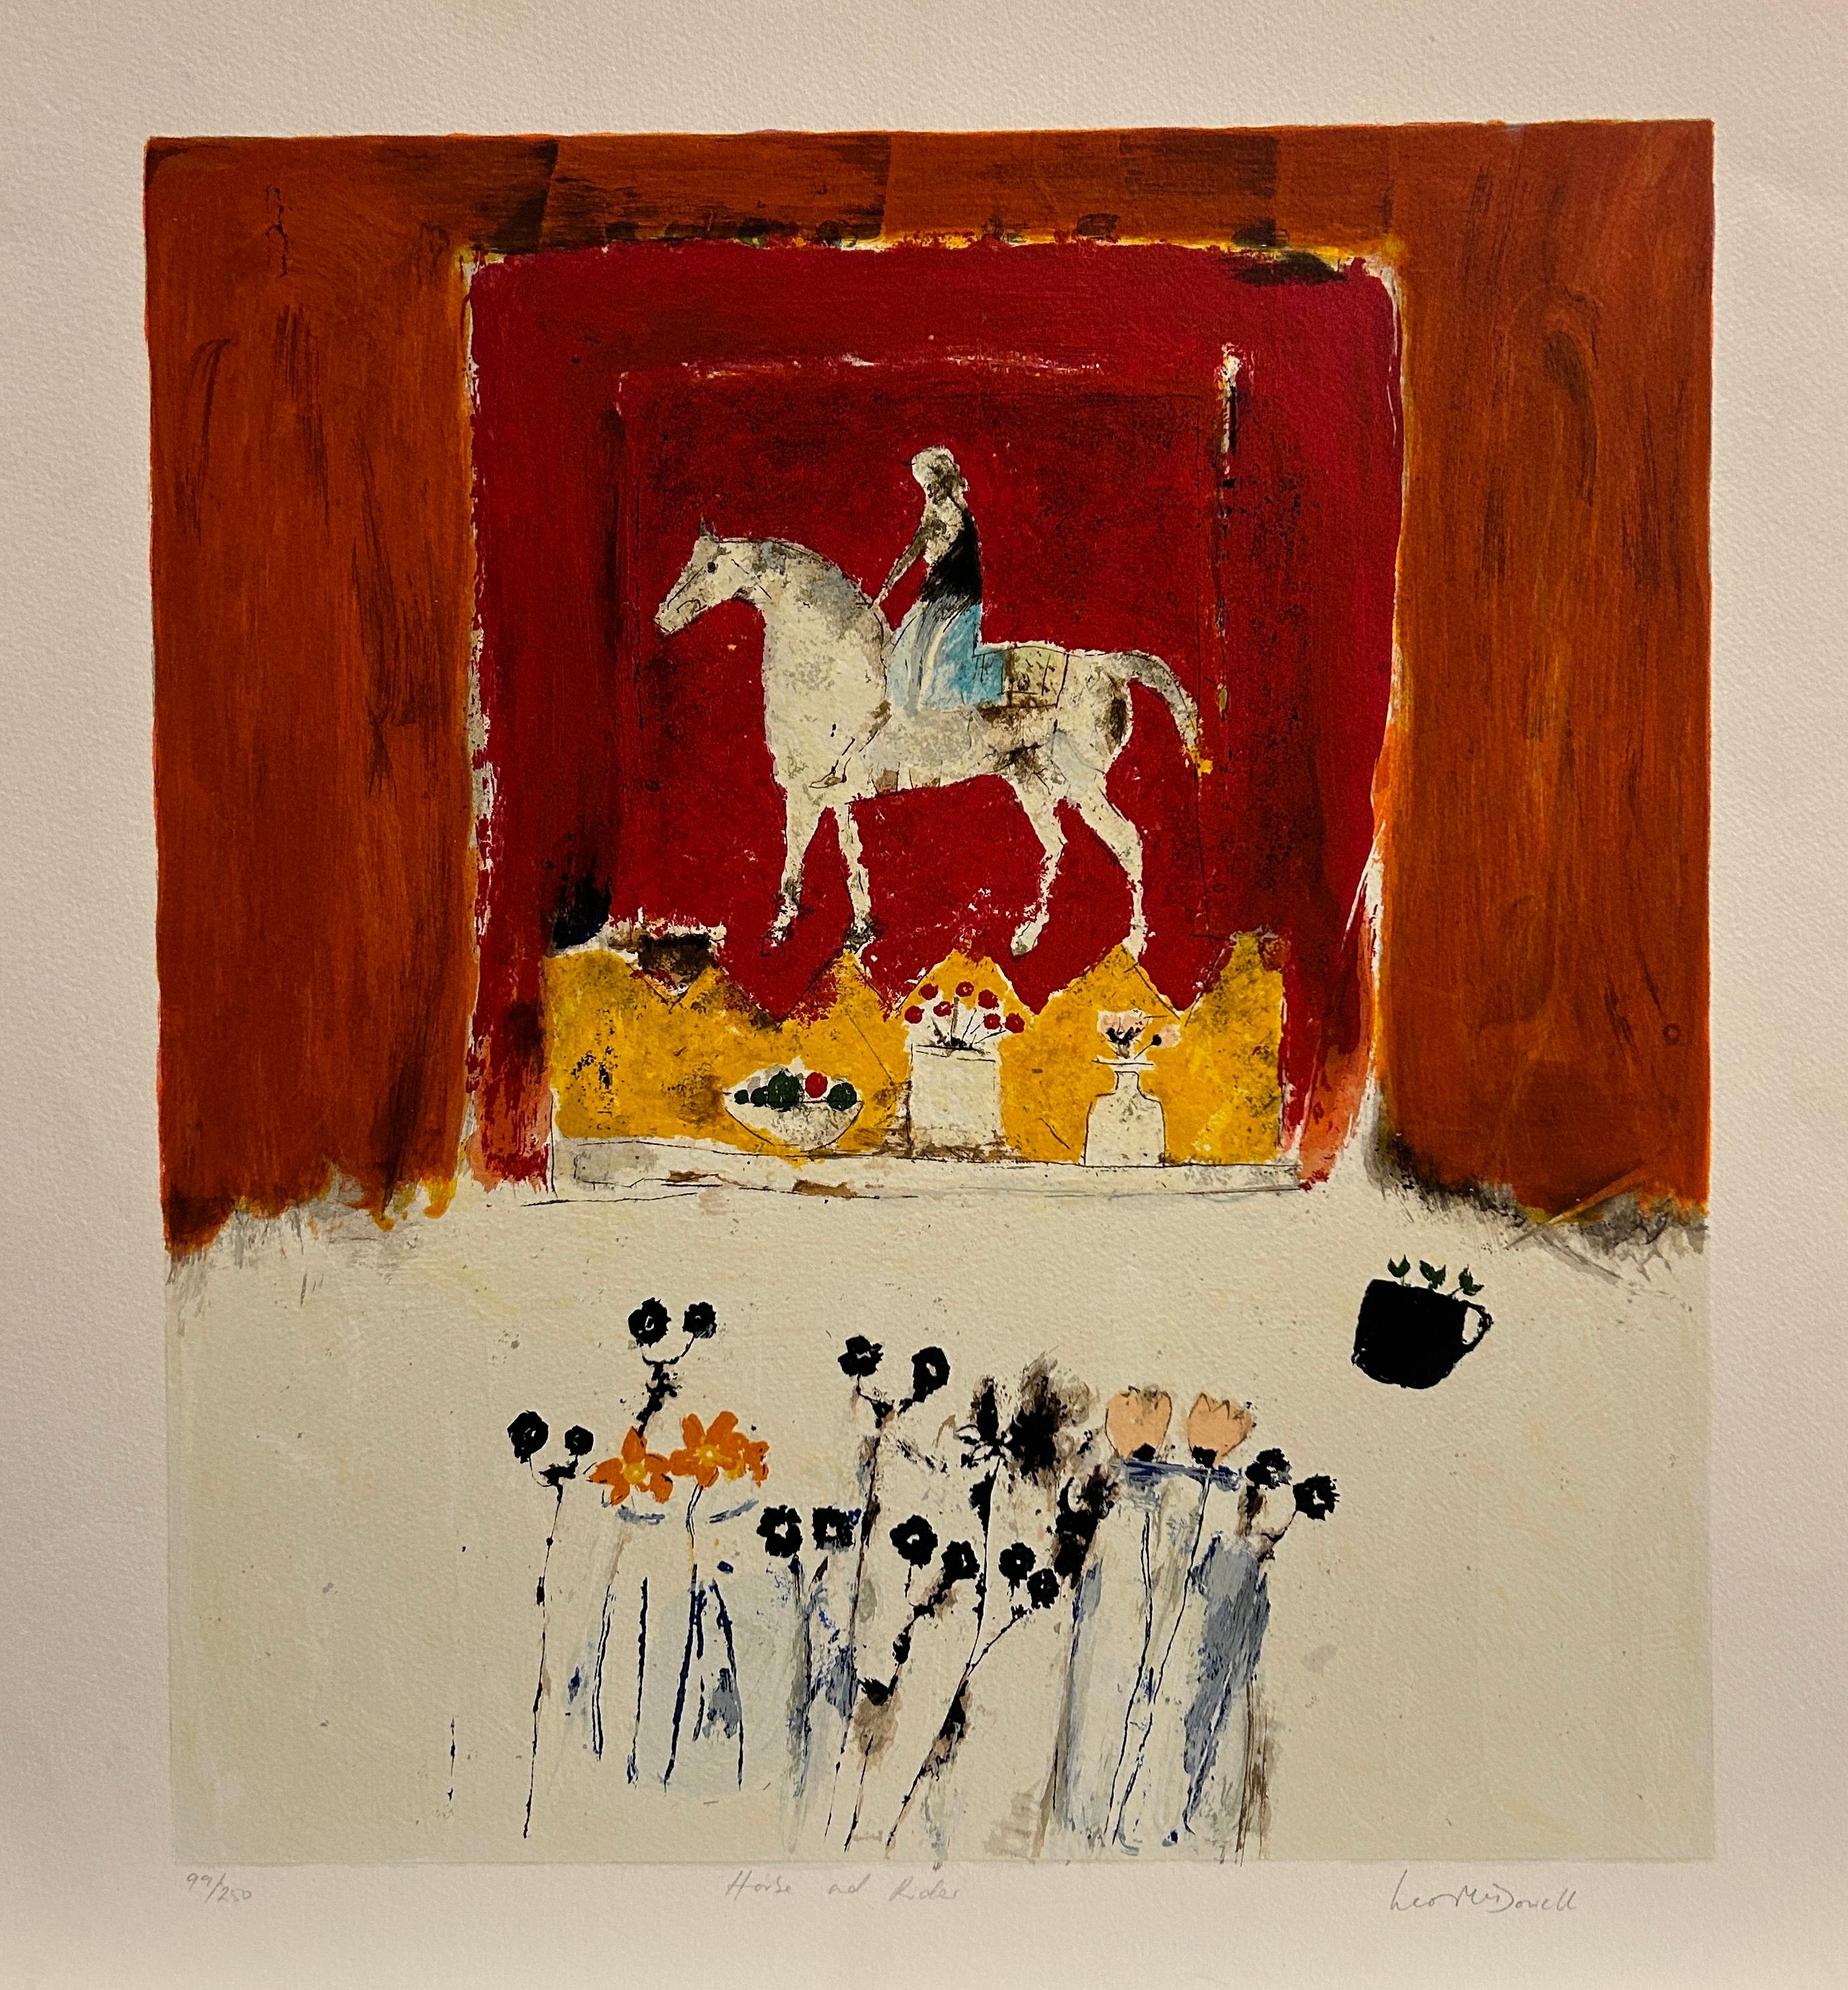 Leo McDOWELL Figurative Print - Horse and Rider